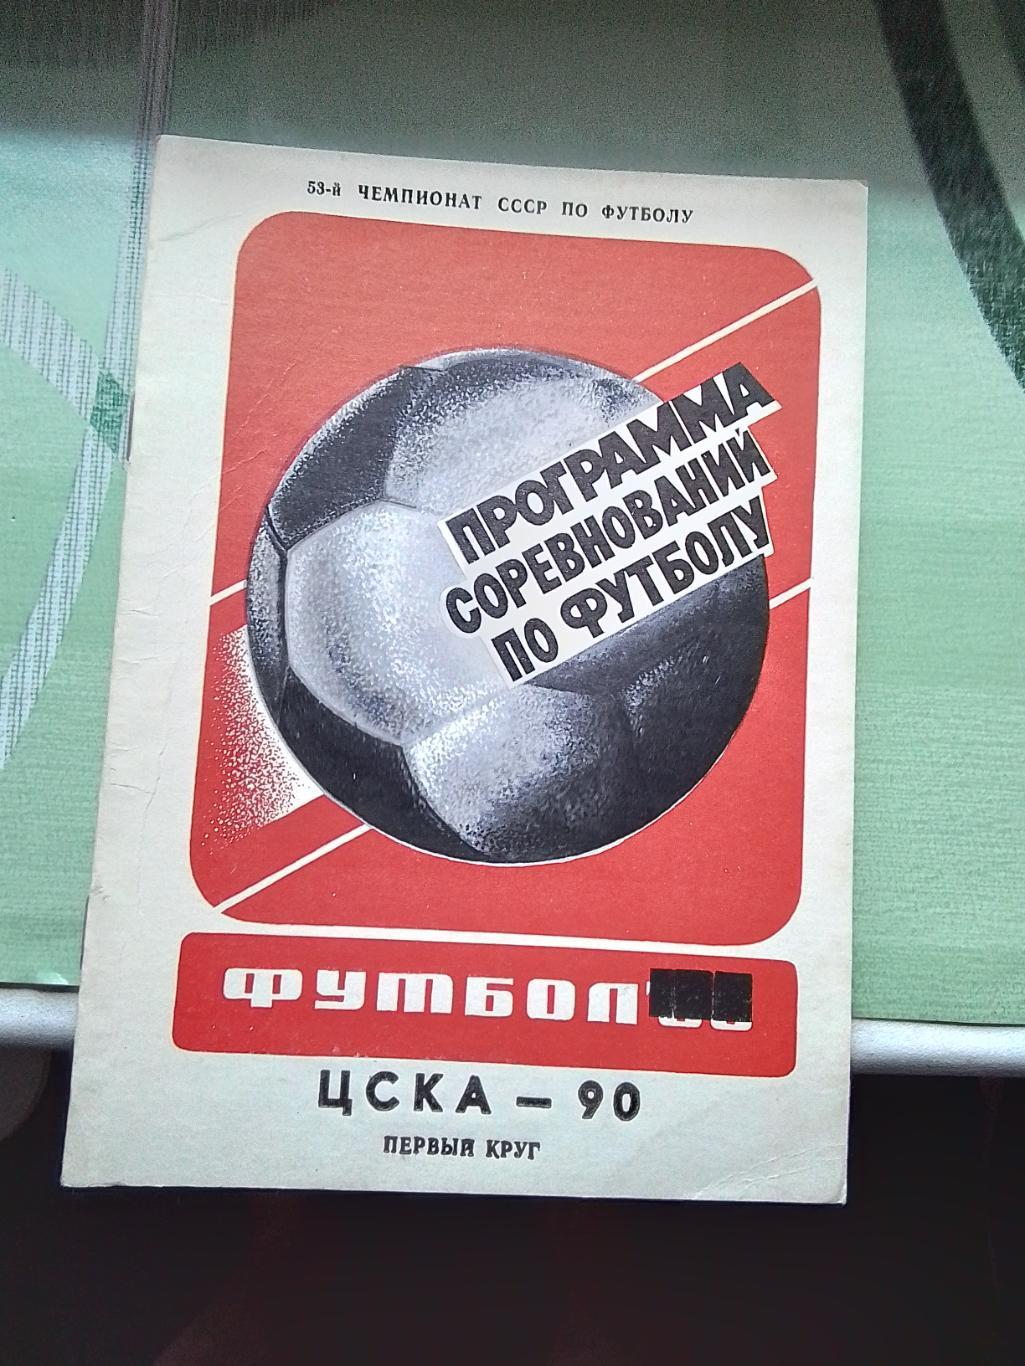 Программа сезона календарь ЦСКА Москва 1990 1 круг